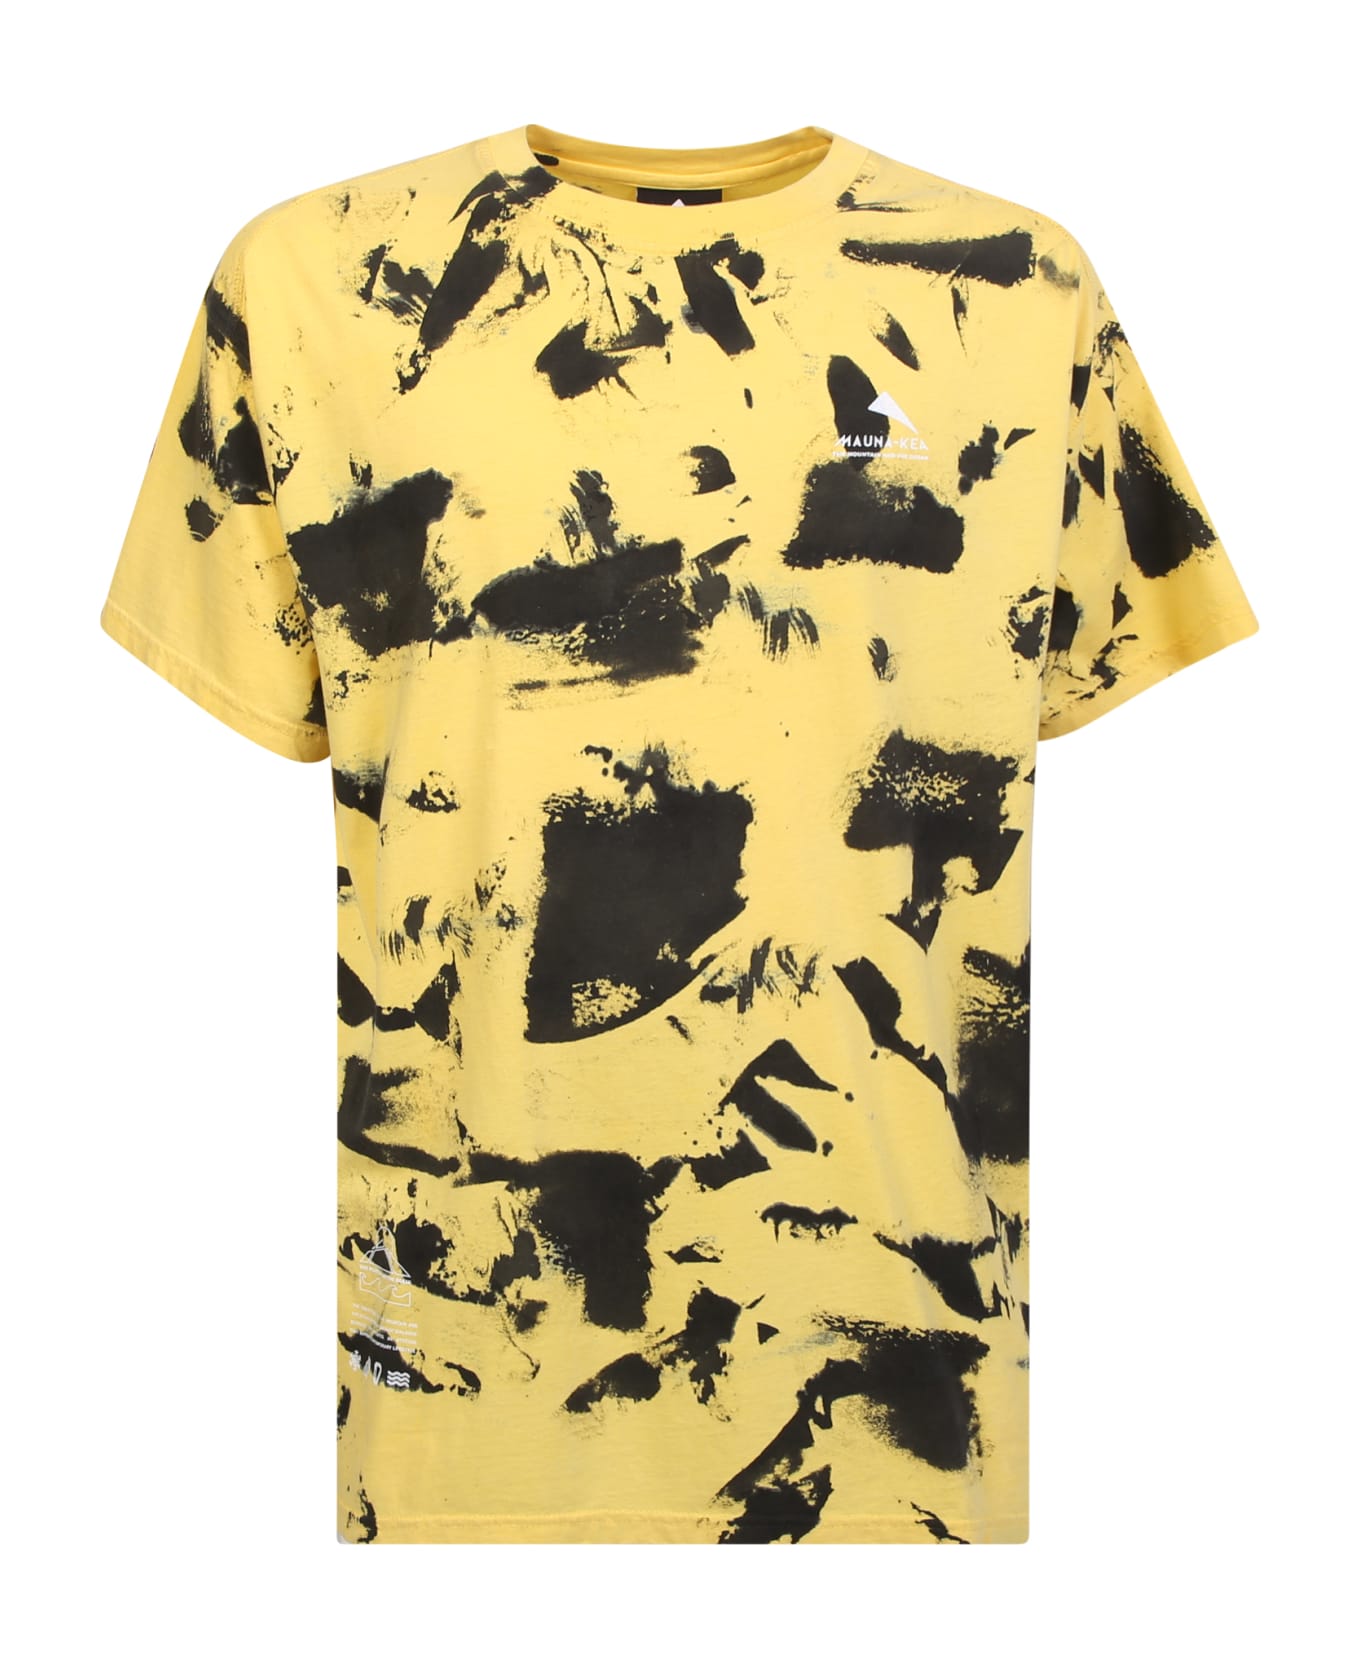 Mauna Kea Yellow Cotton T-shirt - Yellow シャツ